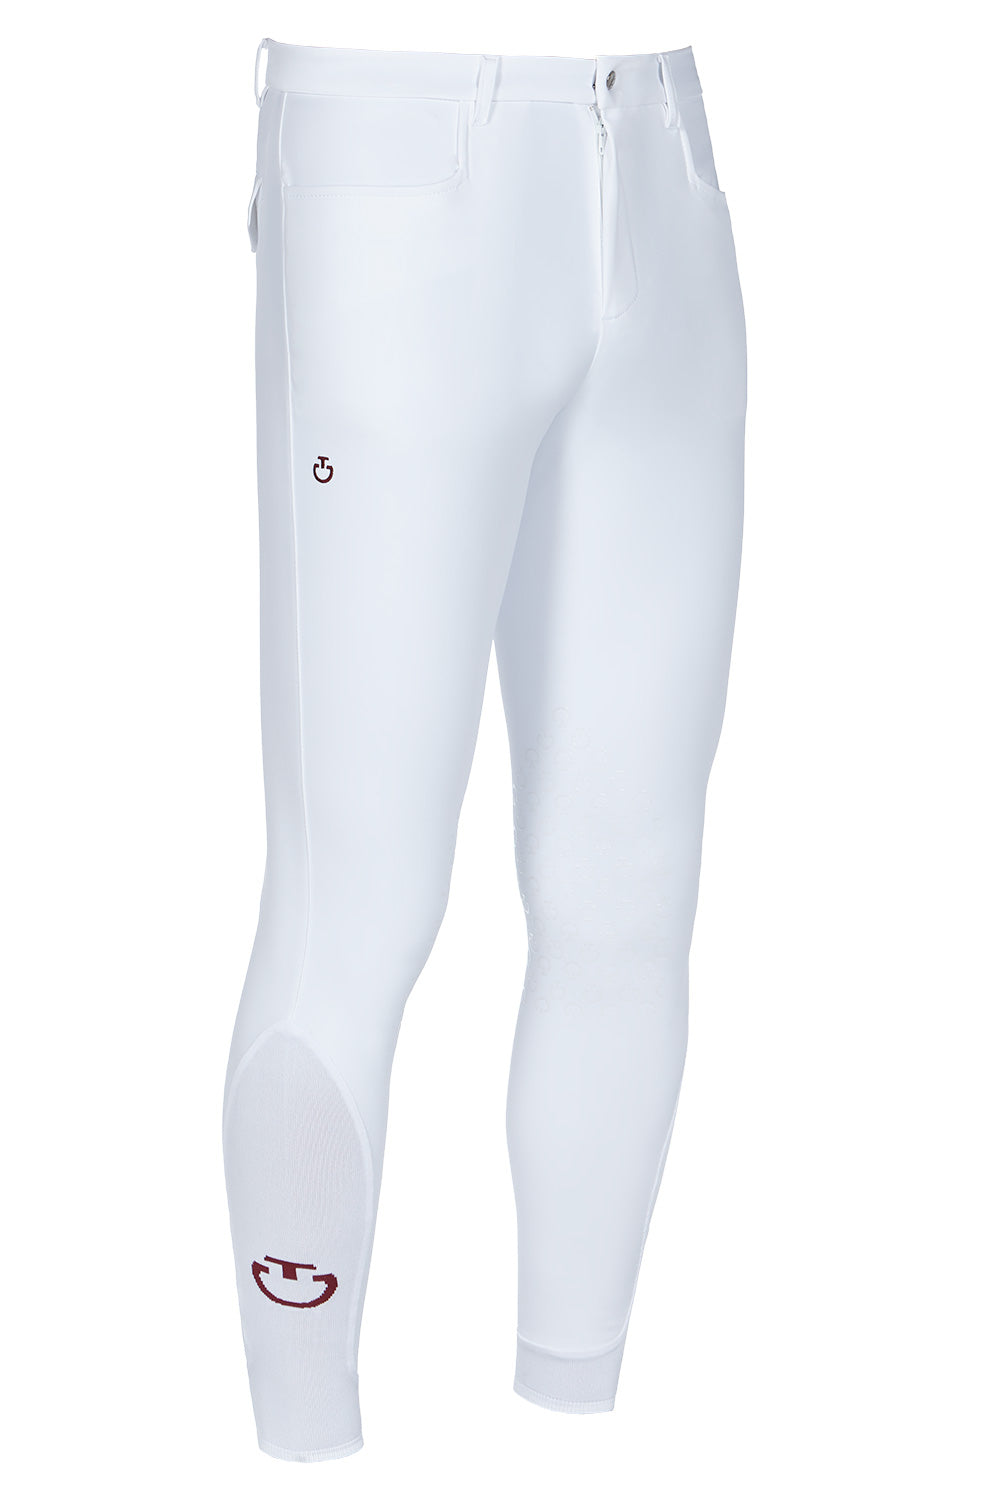 Cavalleria Toscana Men's New Grip System Breeches White - Luxe EQ